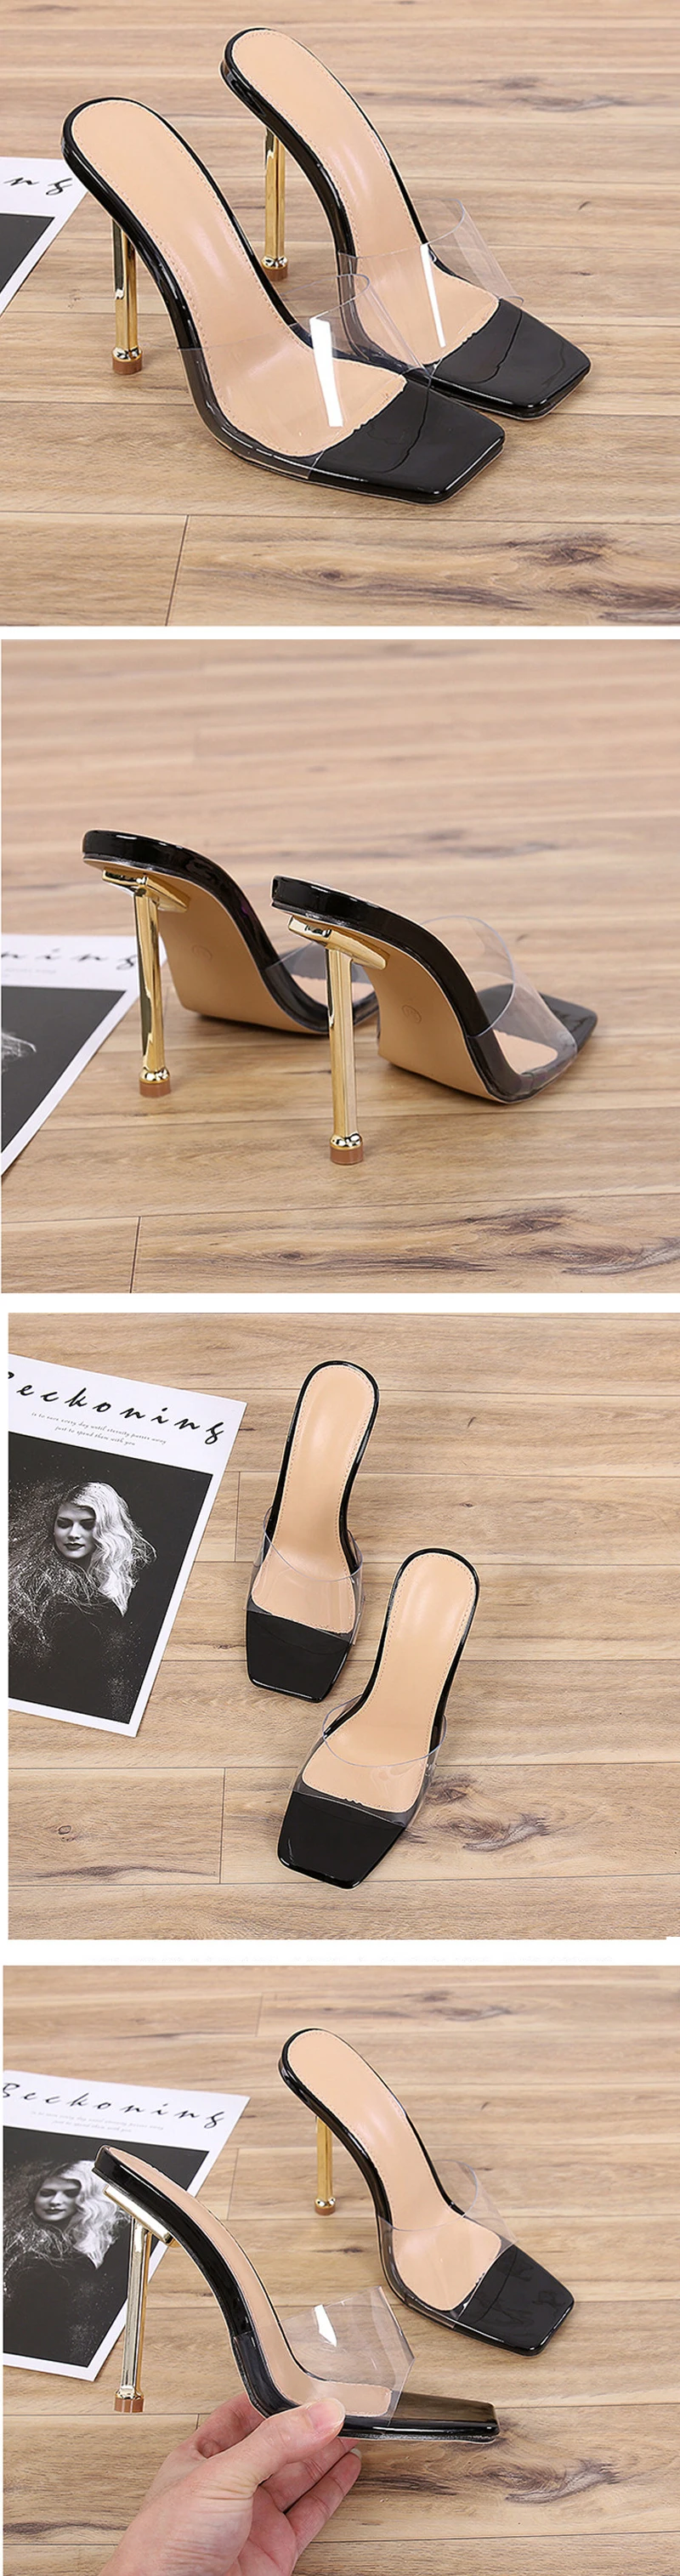 Clothing - Sexy PVC Transparent Metal High Heels Women's Stiletto Sandals